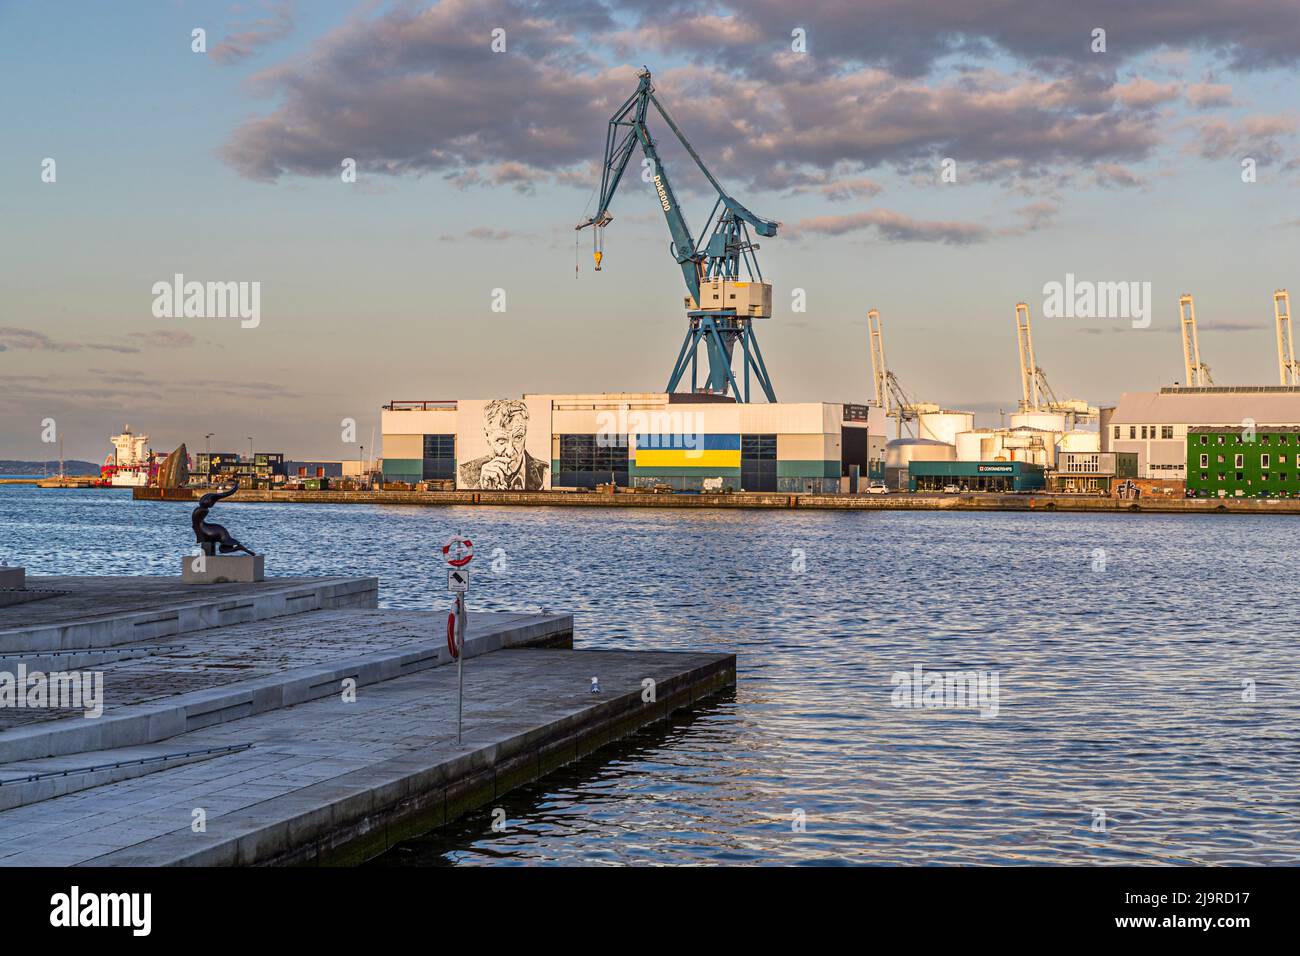 The port of Aarhus, Denmark Stock Photo